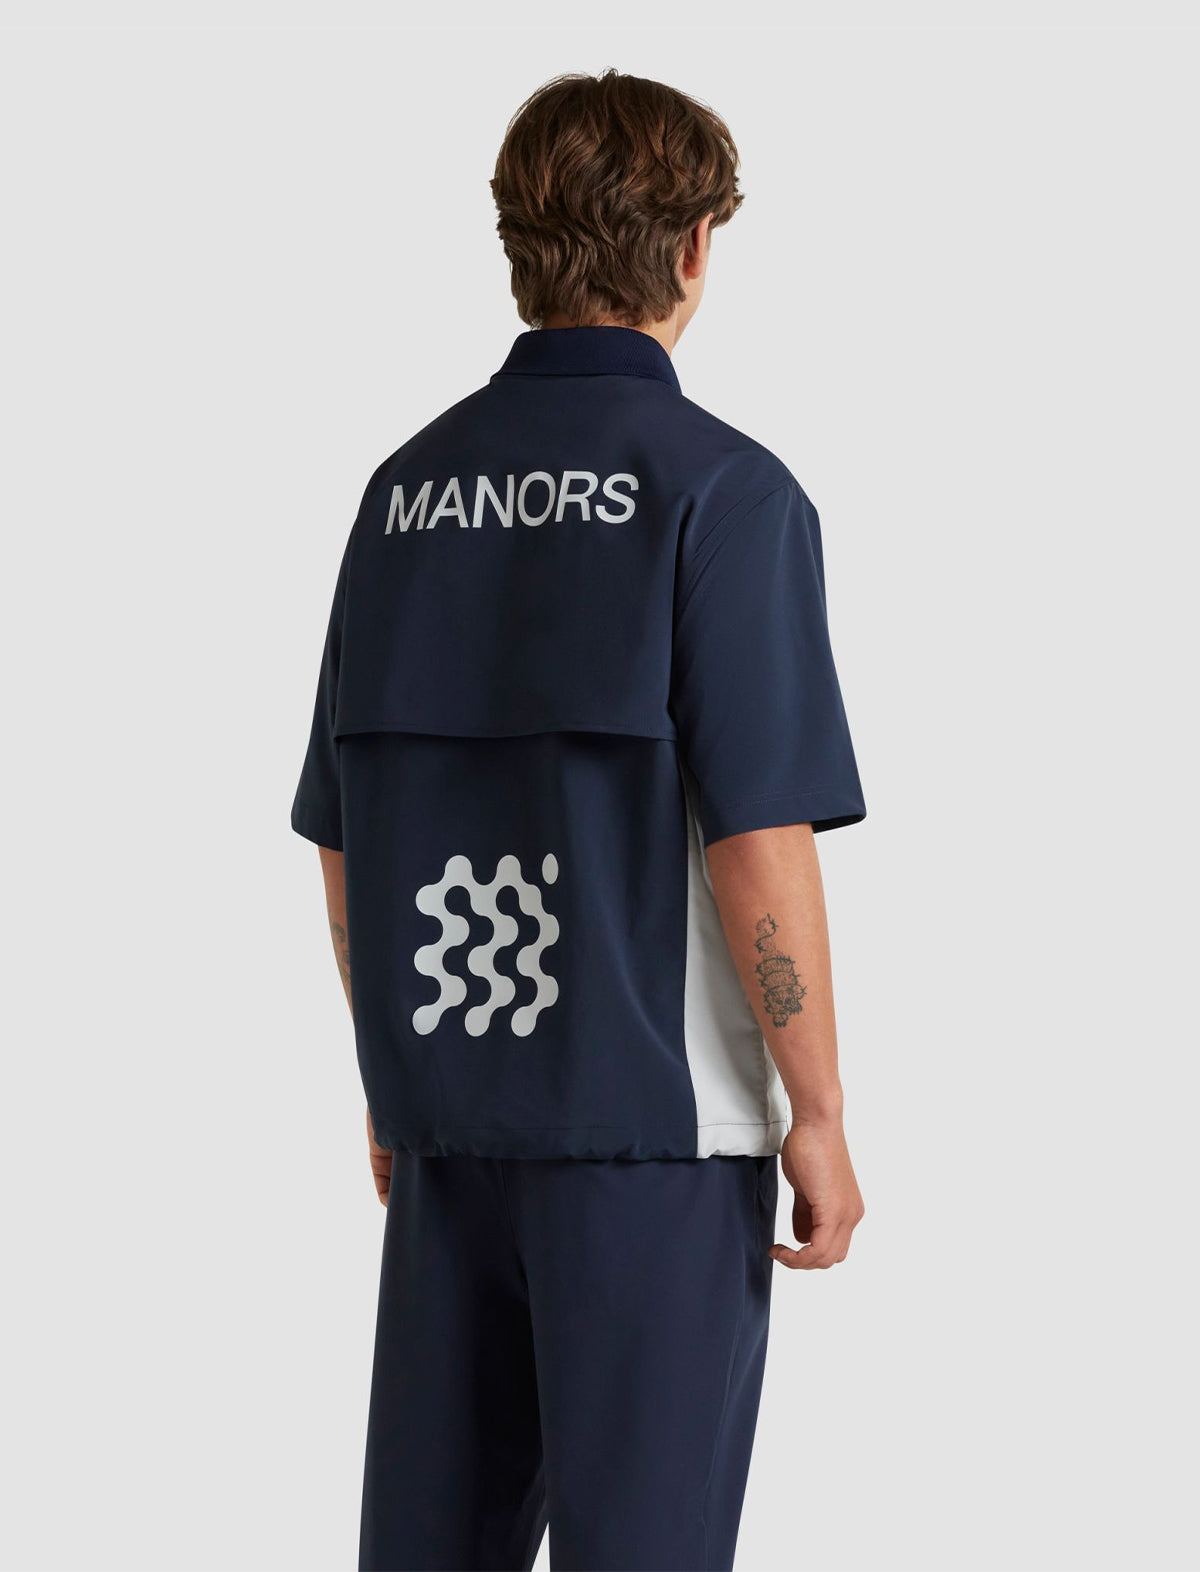 MANORS GOLF Shooter Shirt in Navy